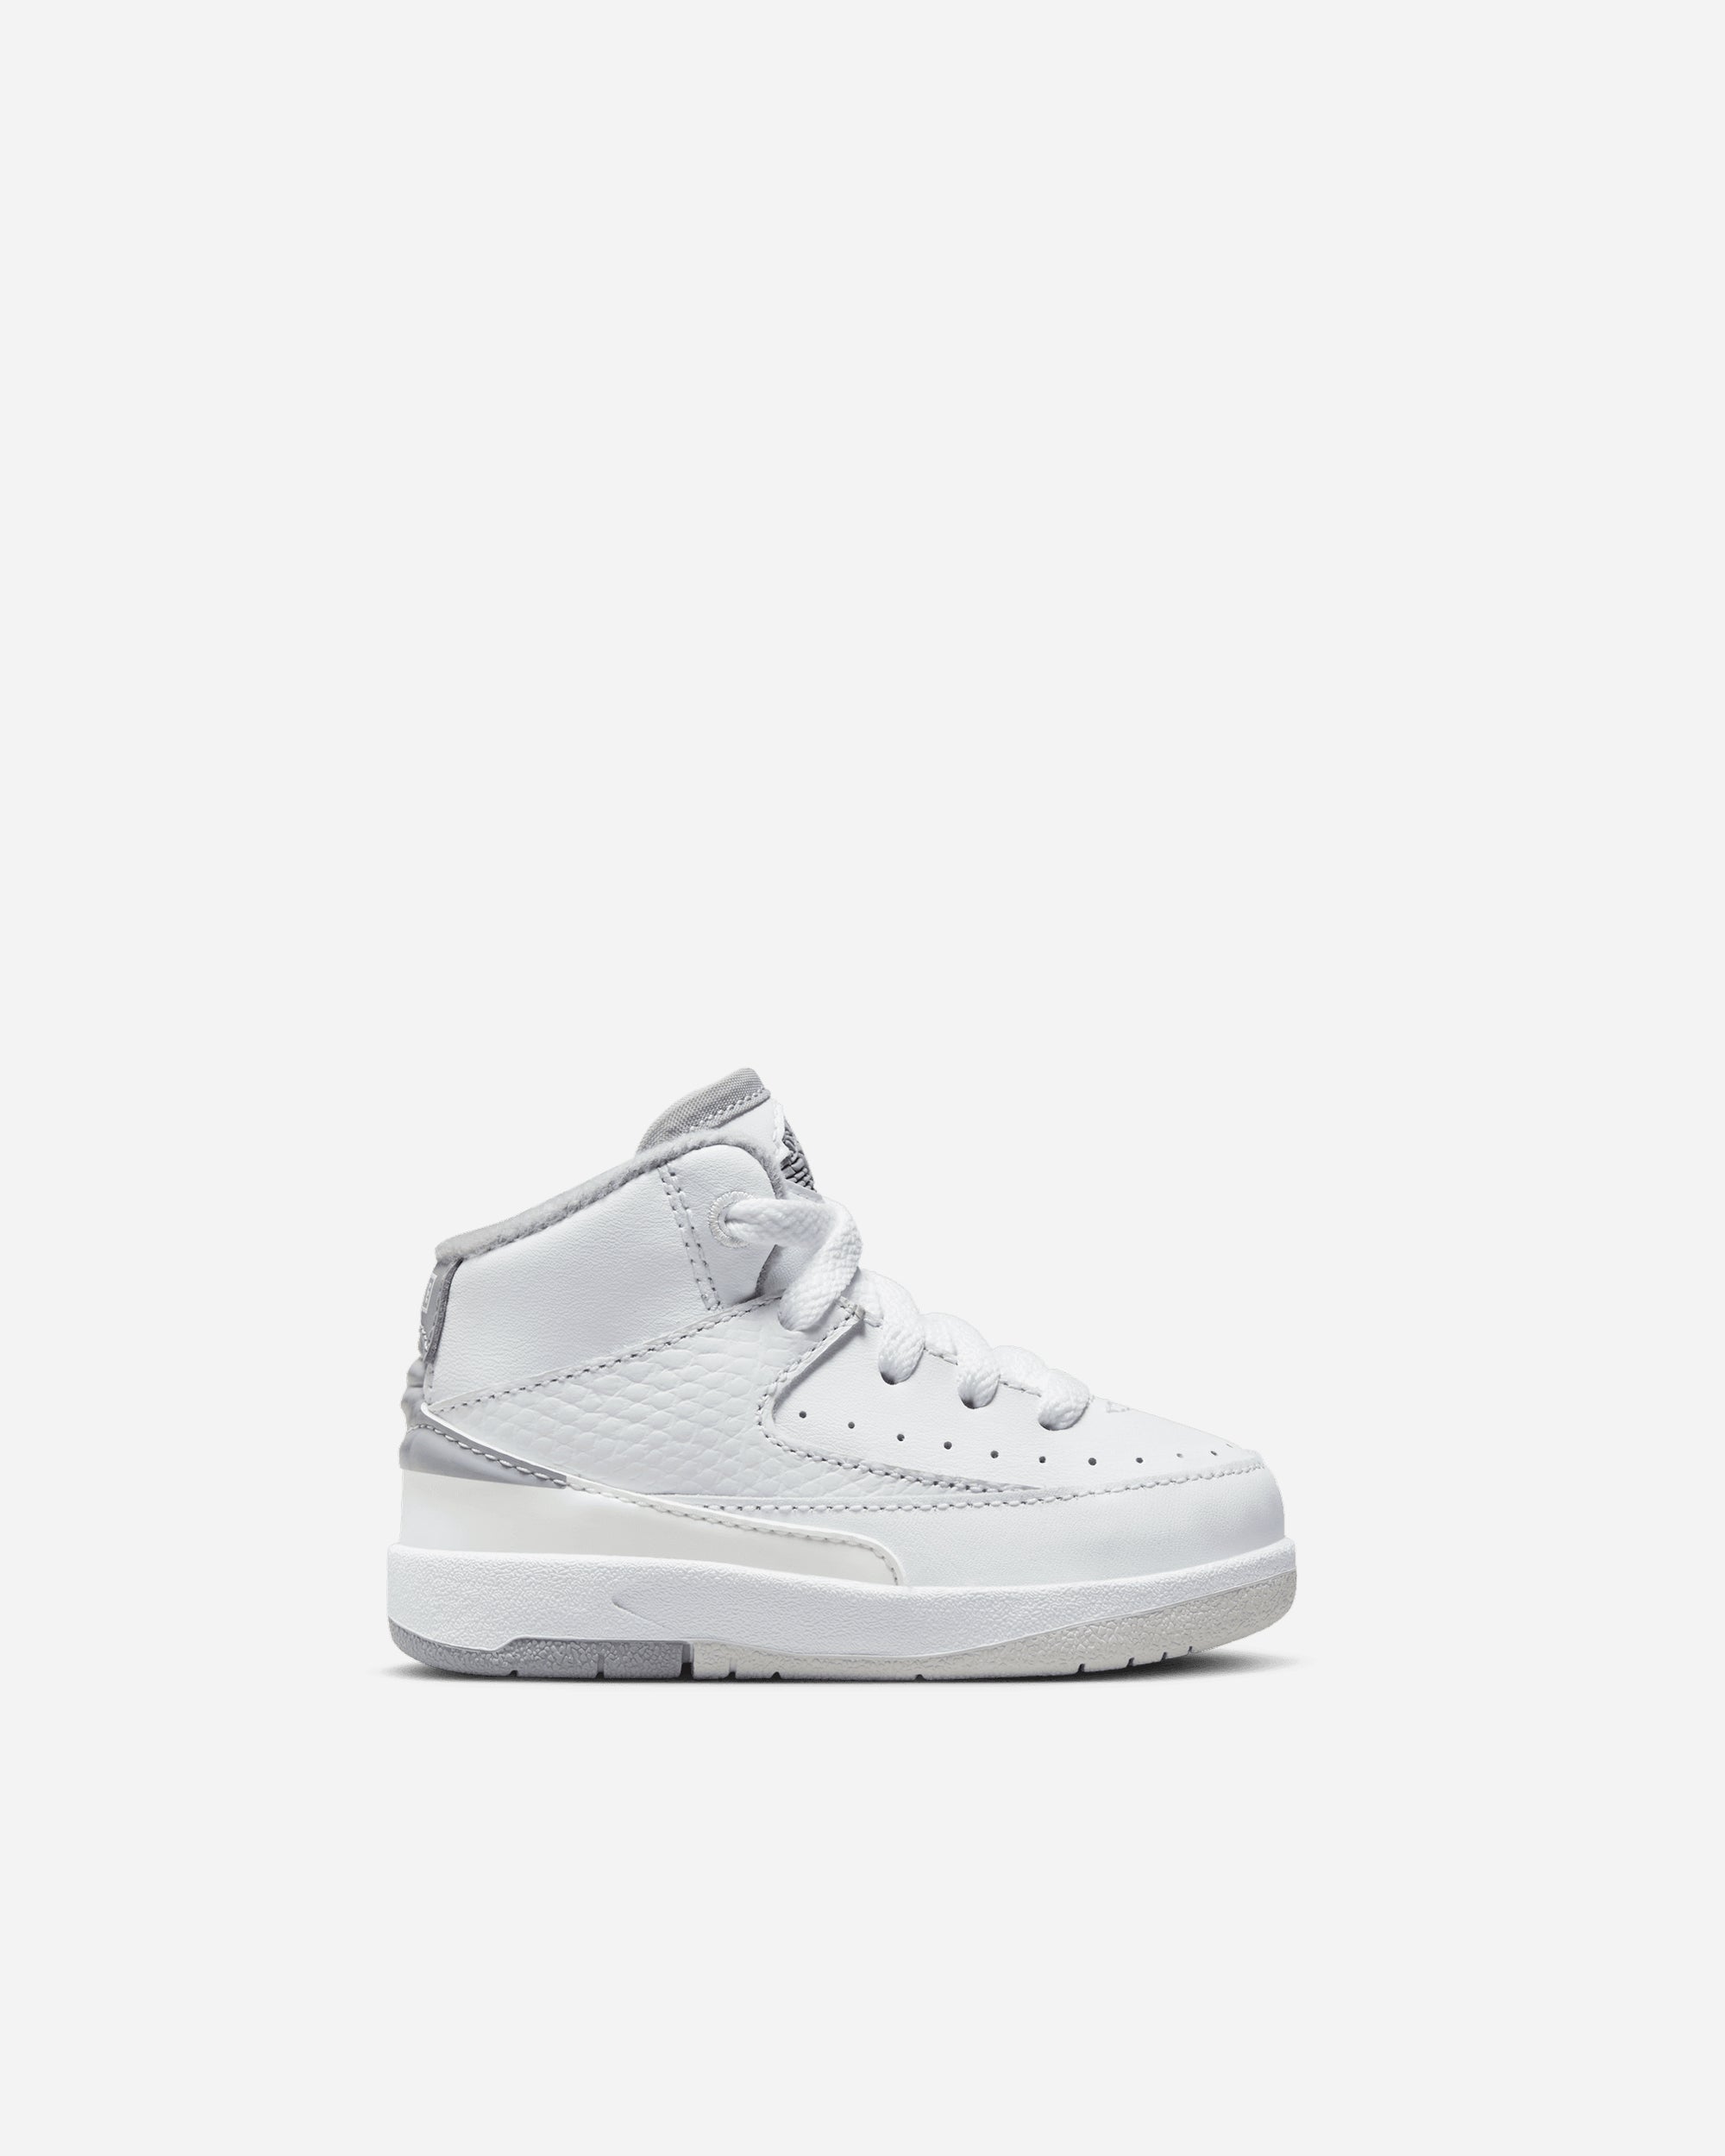 Jordan Brand Jordan 2 Retro (Toddler) WHITE/CEMENT GREY-SAIL-BLACK DQ8563-100